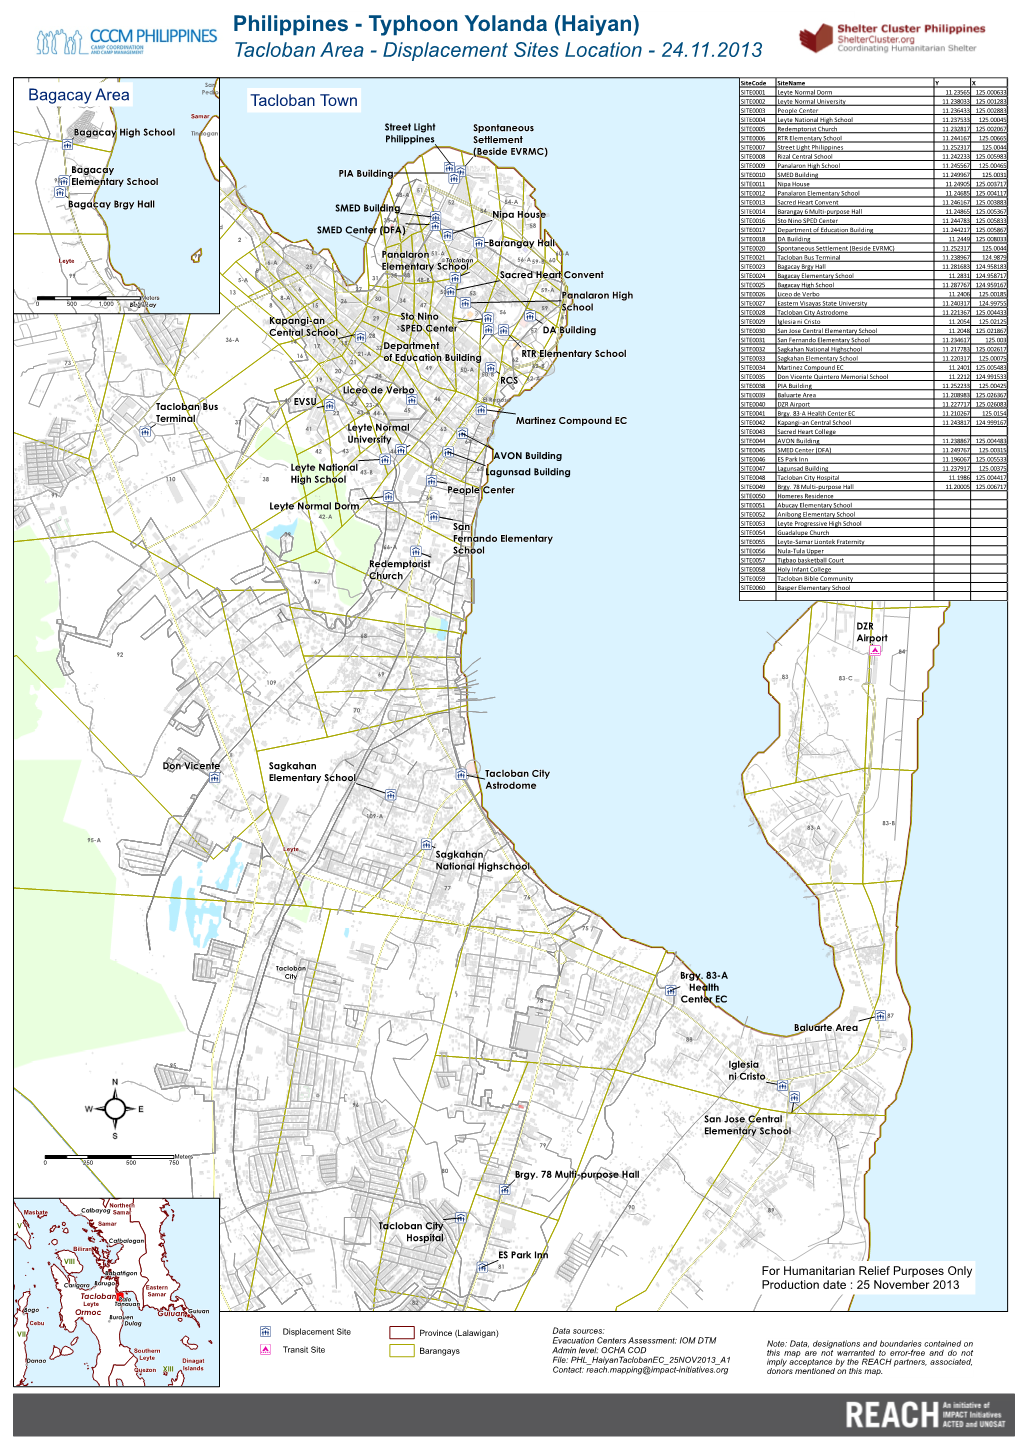 Tacloban Area - Displacement Sites Location - 24.11.2013